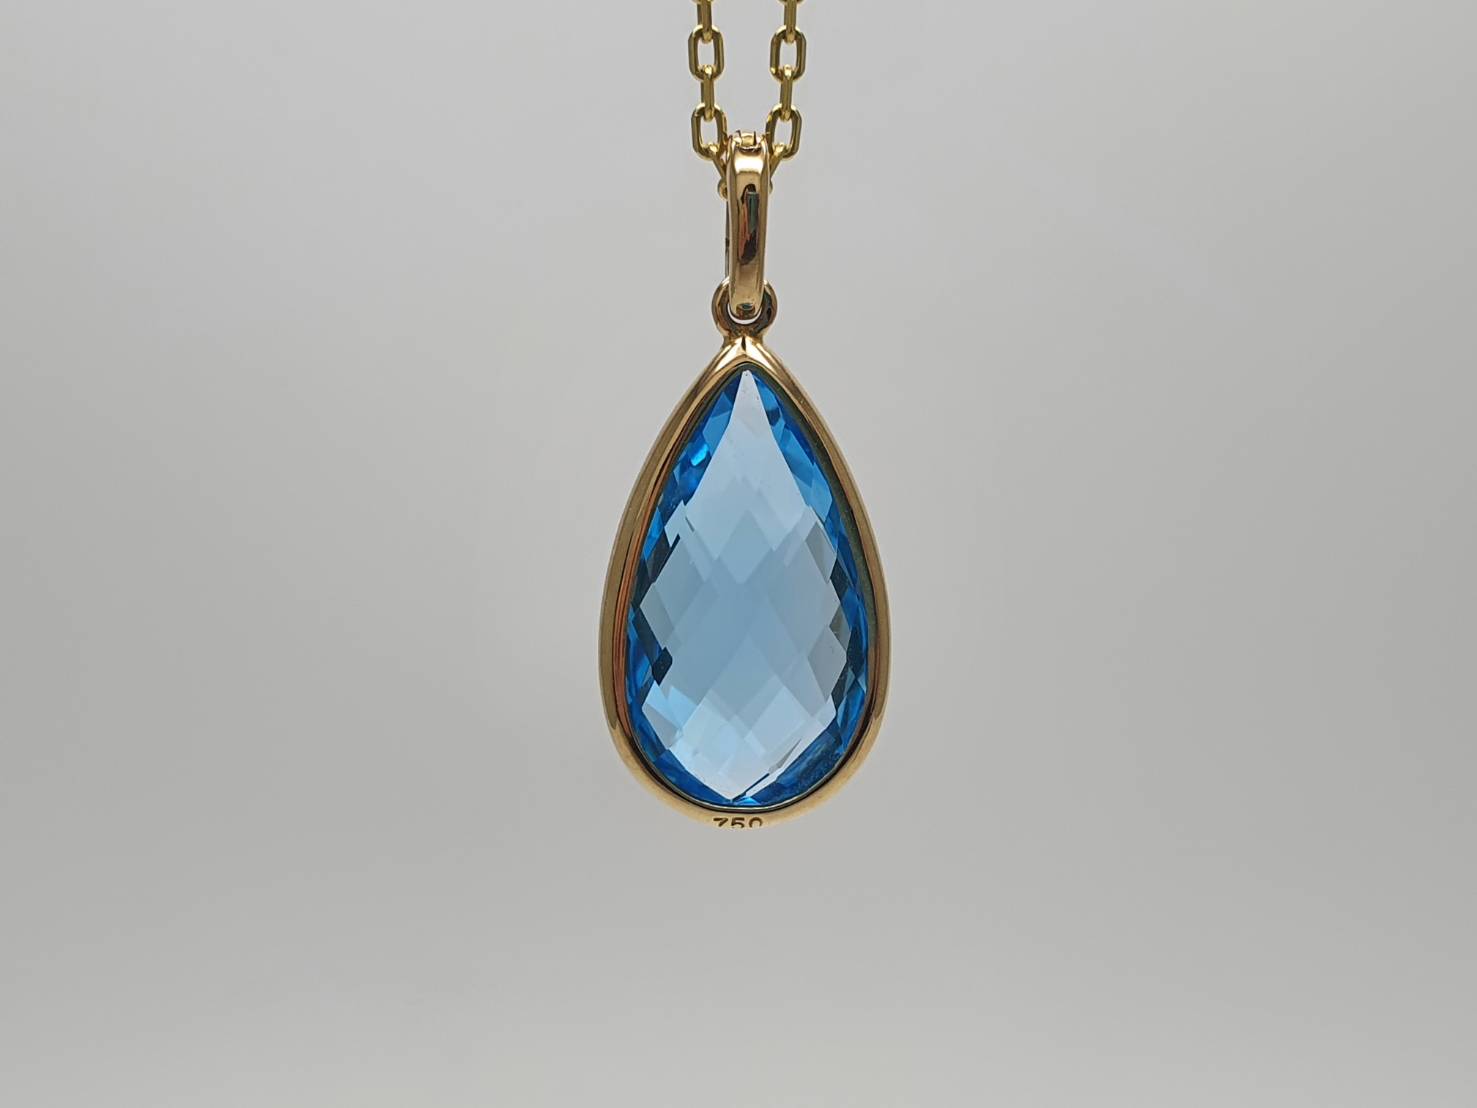 Blue Topaz pendant